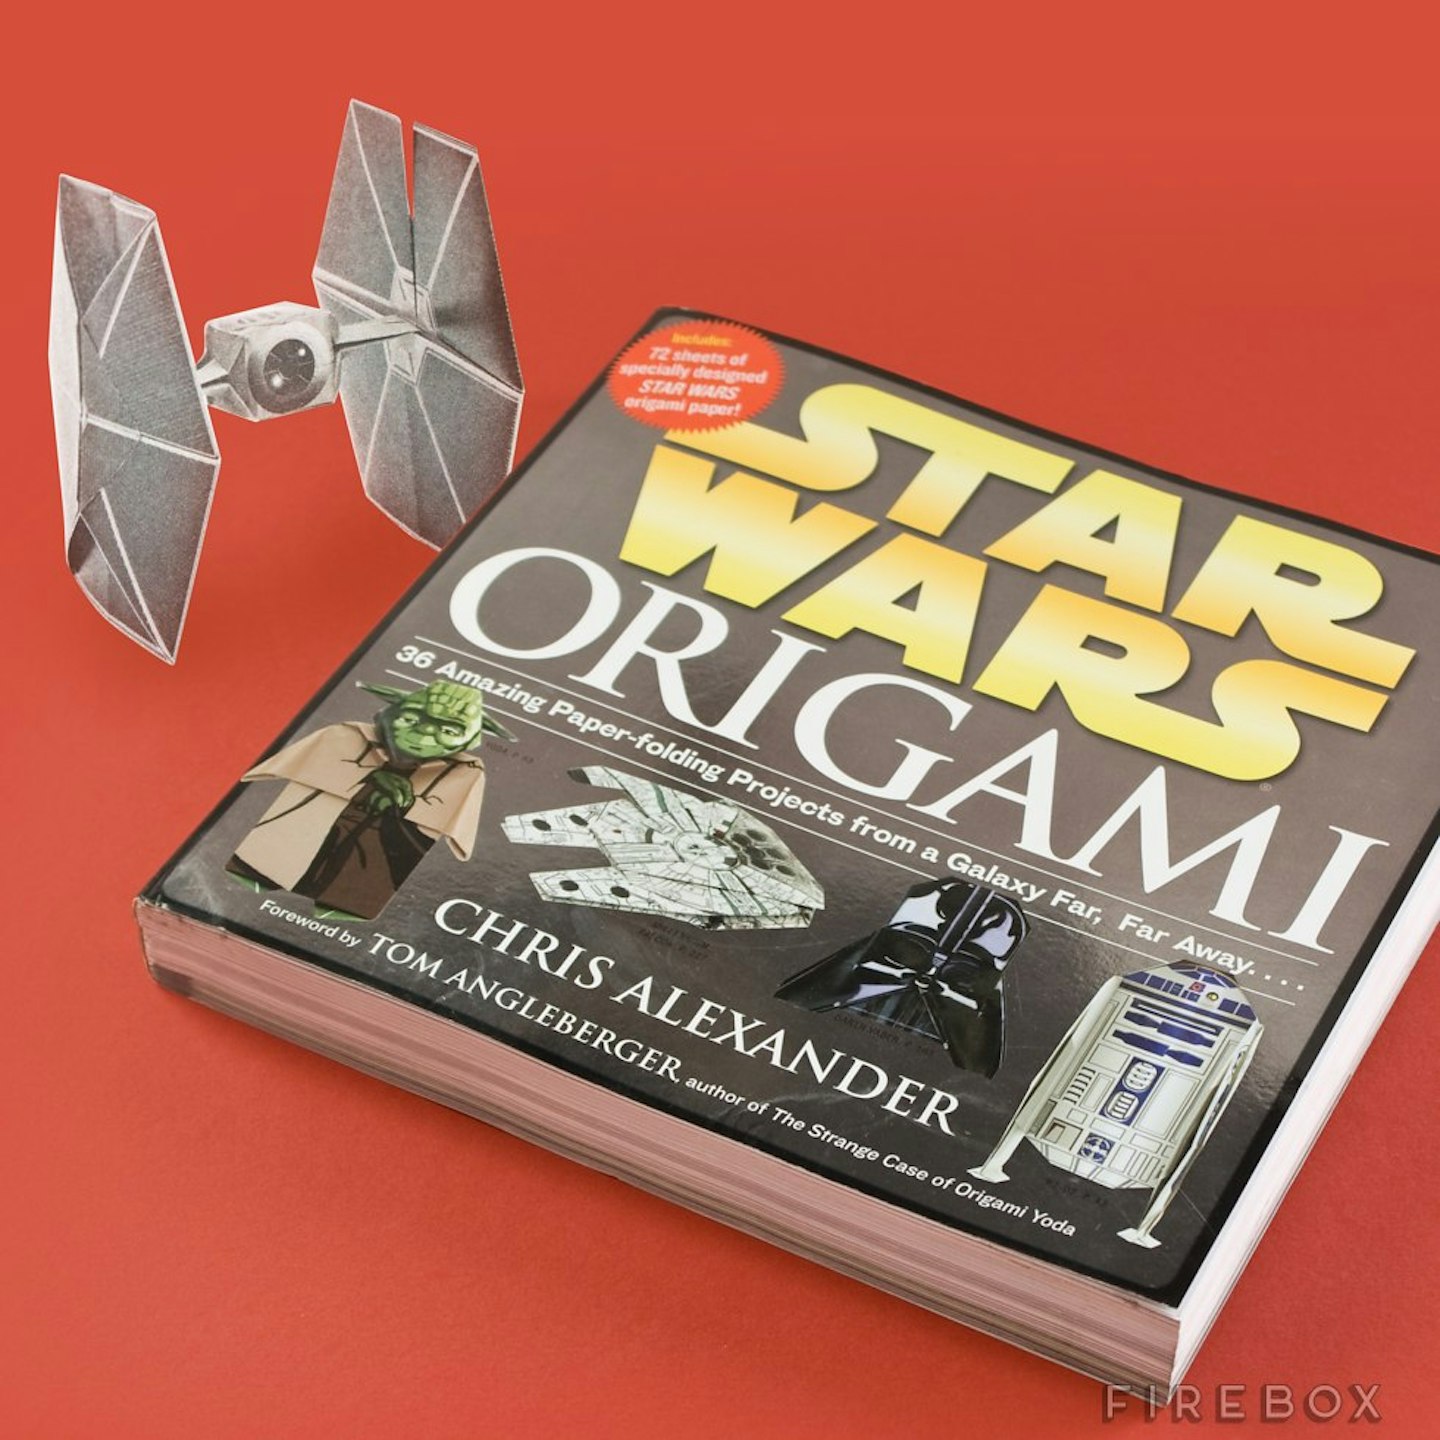 Star Wars Origami, £12.99